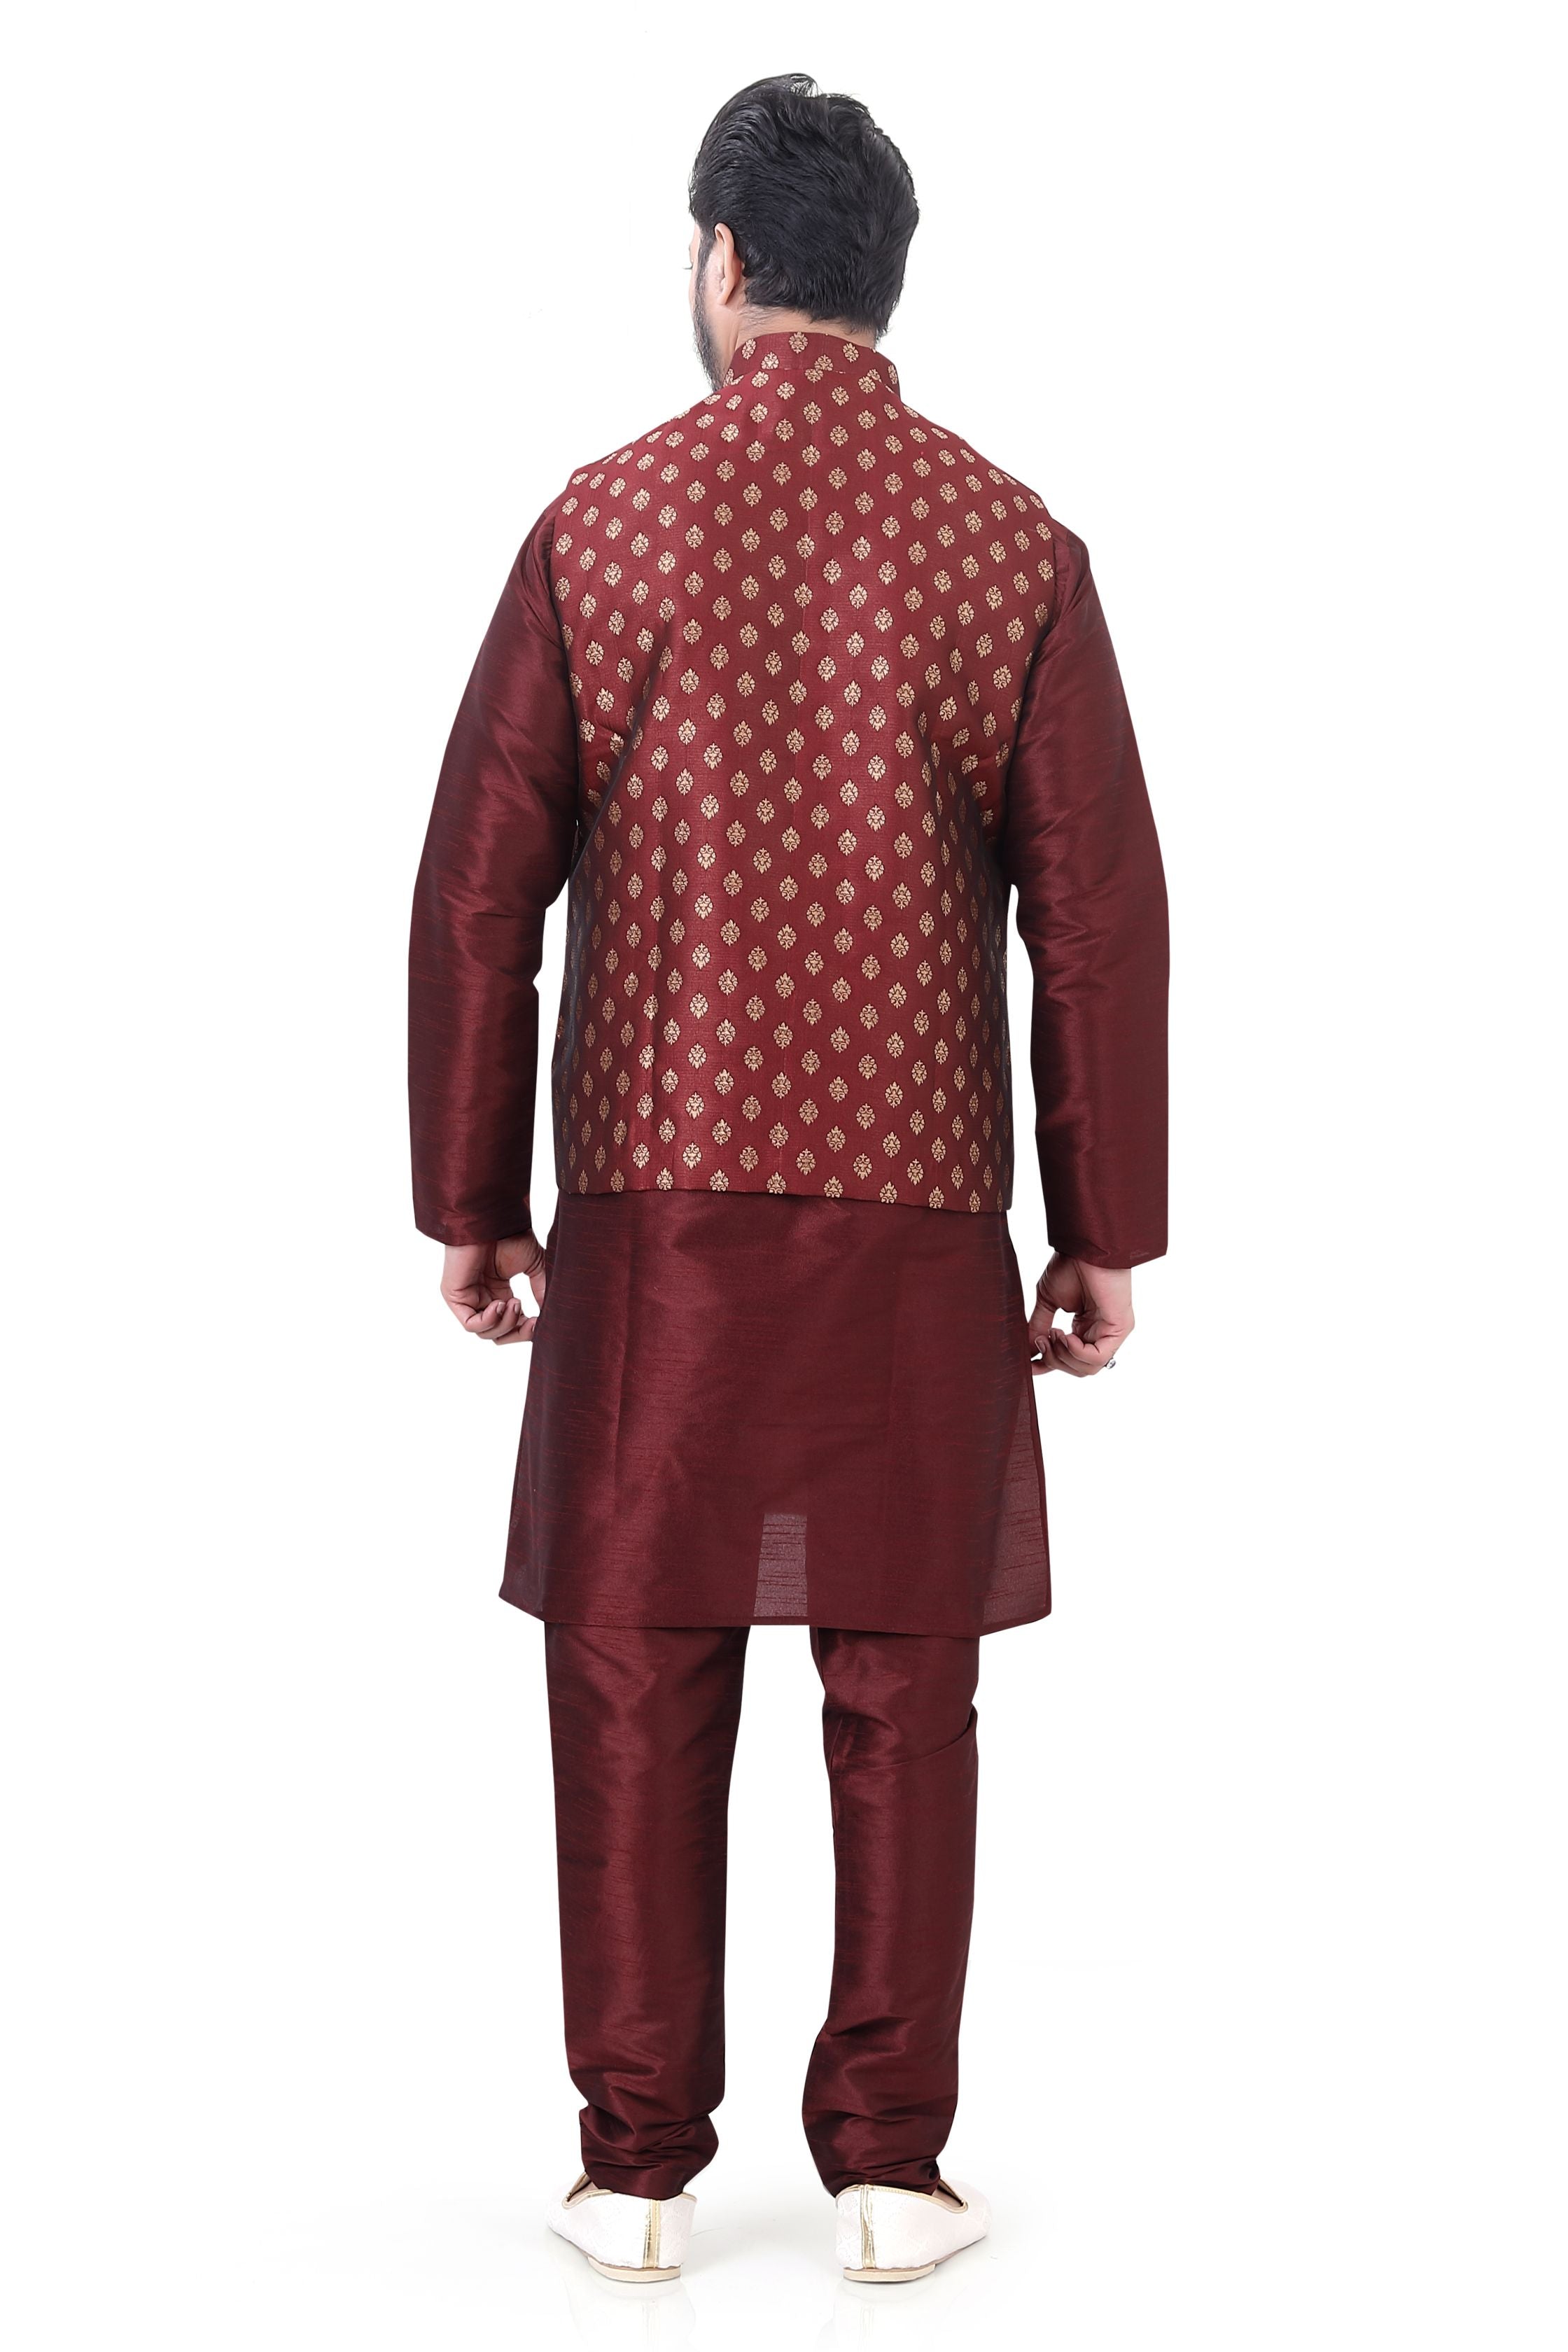 Plus size Modi Jacket set in Maroon color